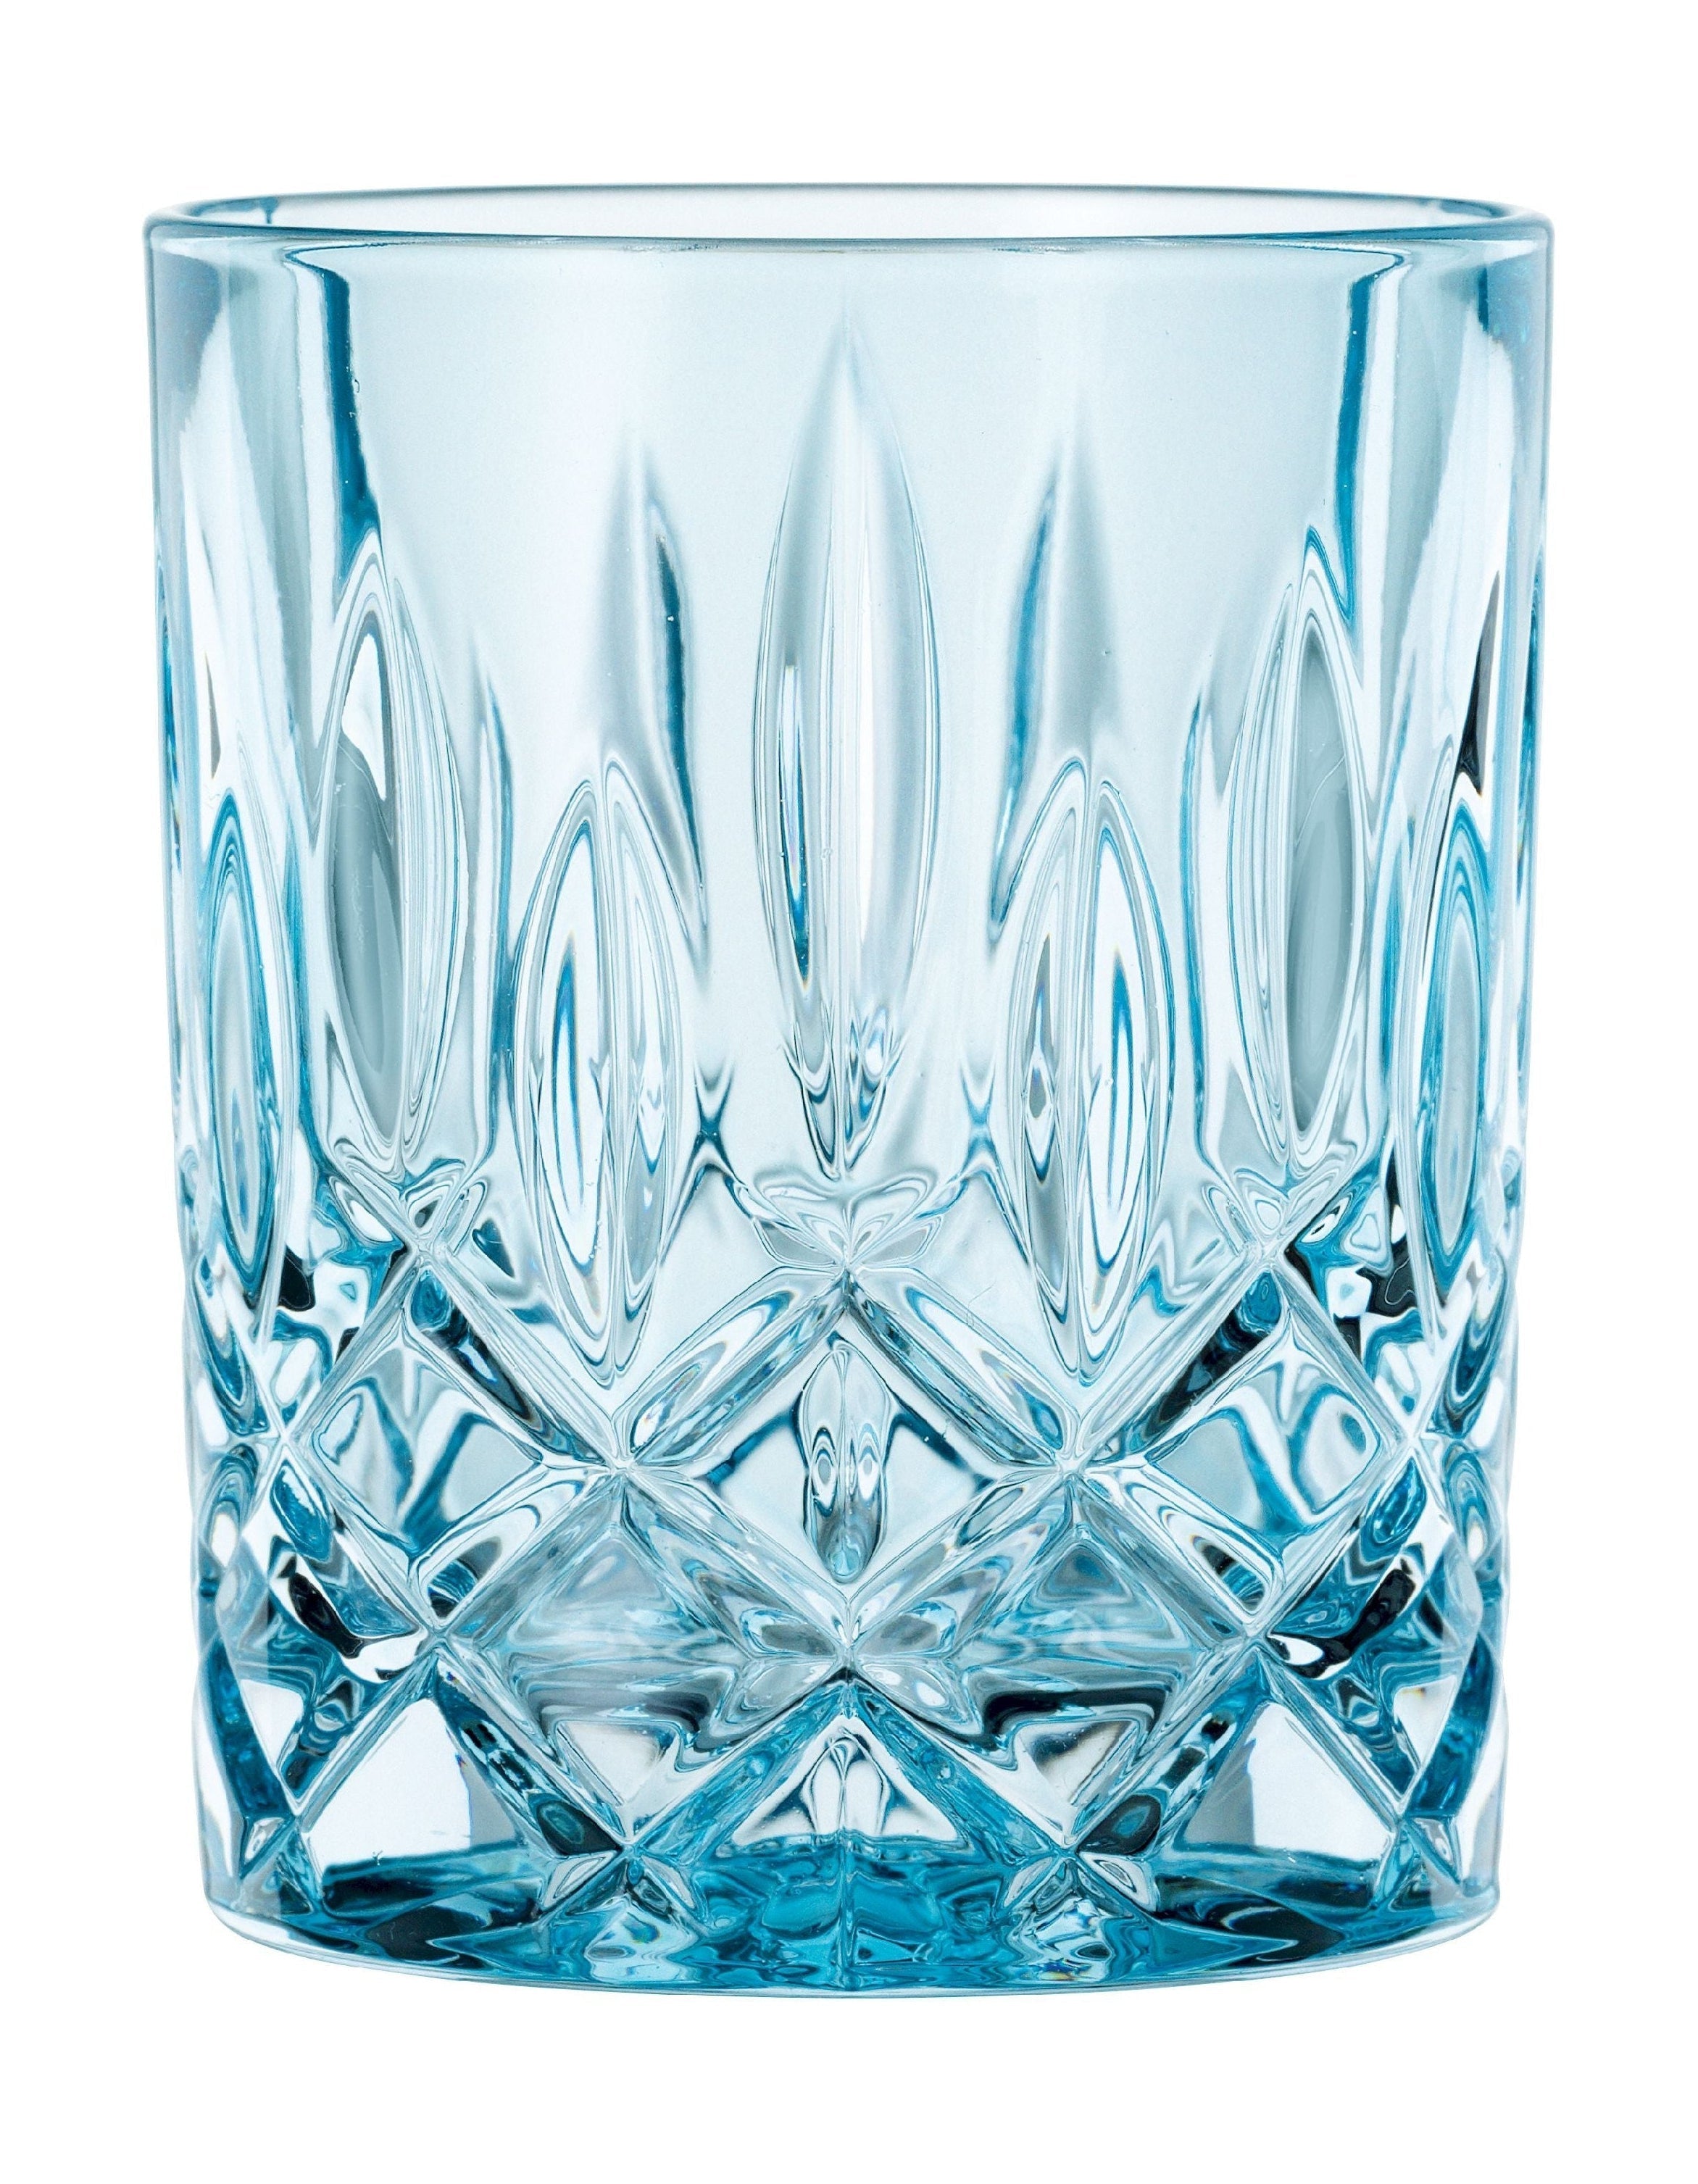 Nachtmann Noblesse Whisky Glass Aqua 295 ml, sada 2